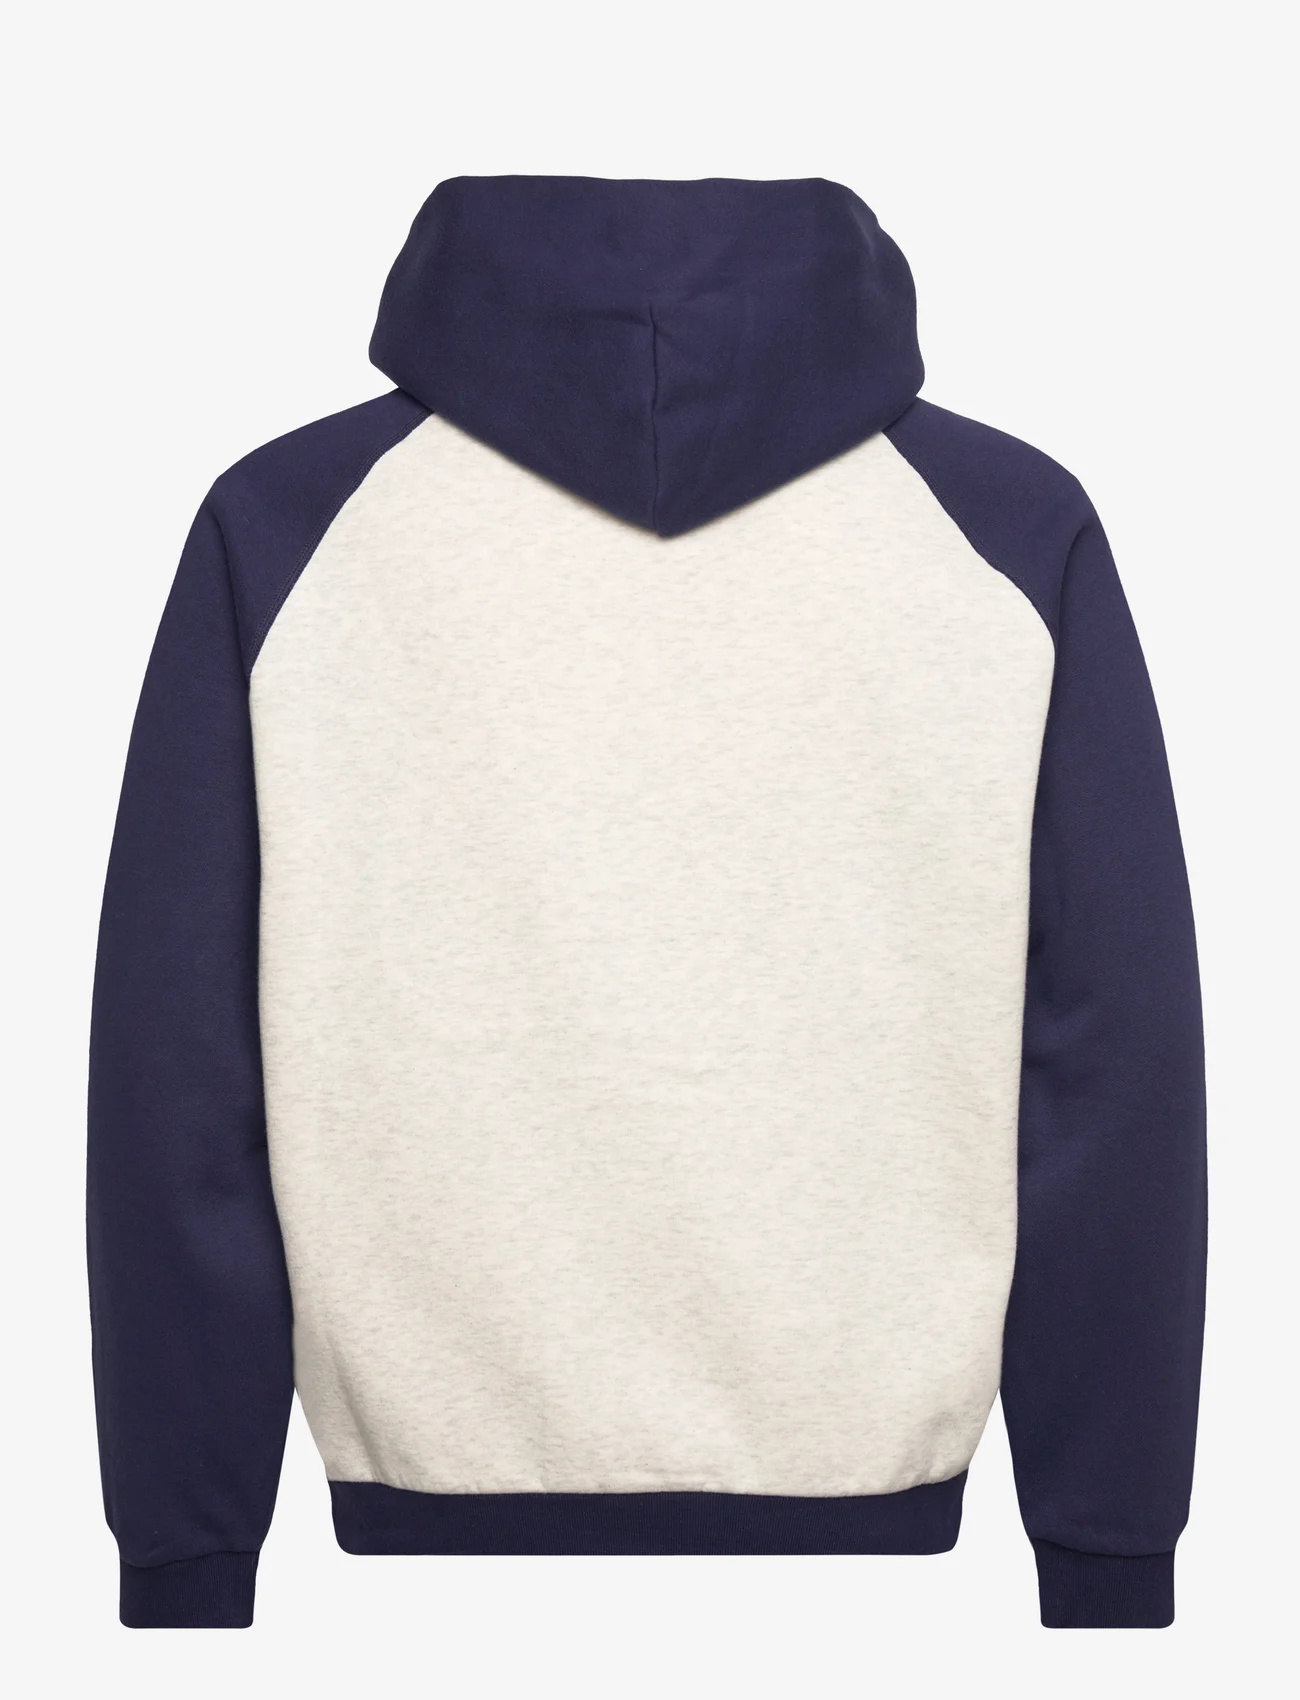 Champion - Hooded Sweatshirt - bluzy z kapturem - gray melange  light - 1